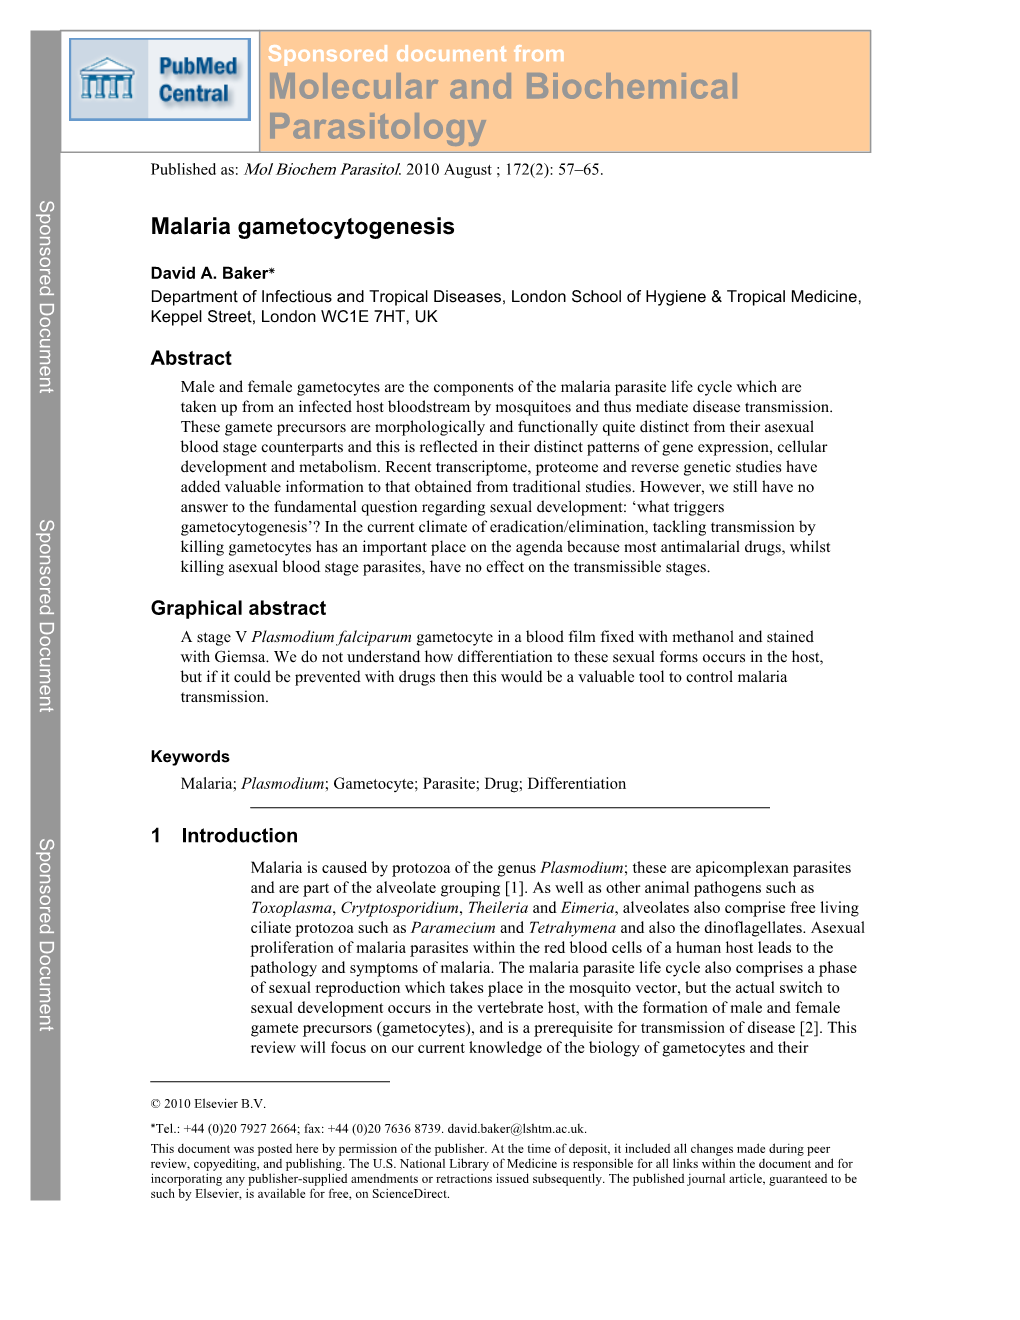 Molecular and Biochemical Parasitology Published As: Mol Biochem Parasitol